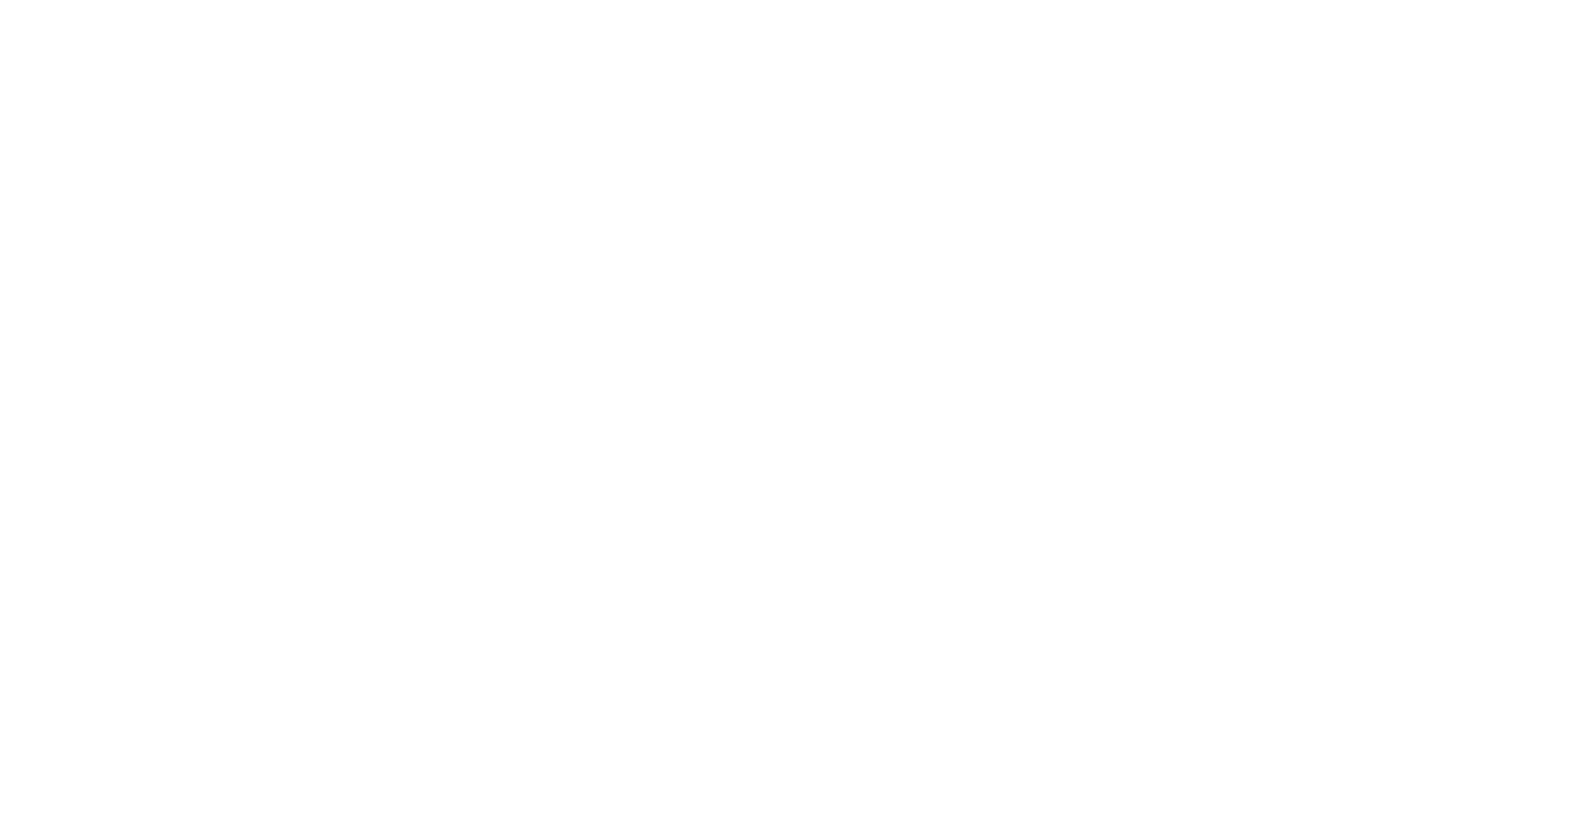 RSA Insurance Group logo large for dark backgrounds (transparent PNG)